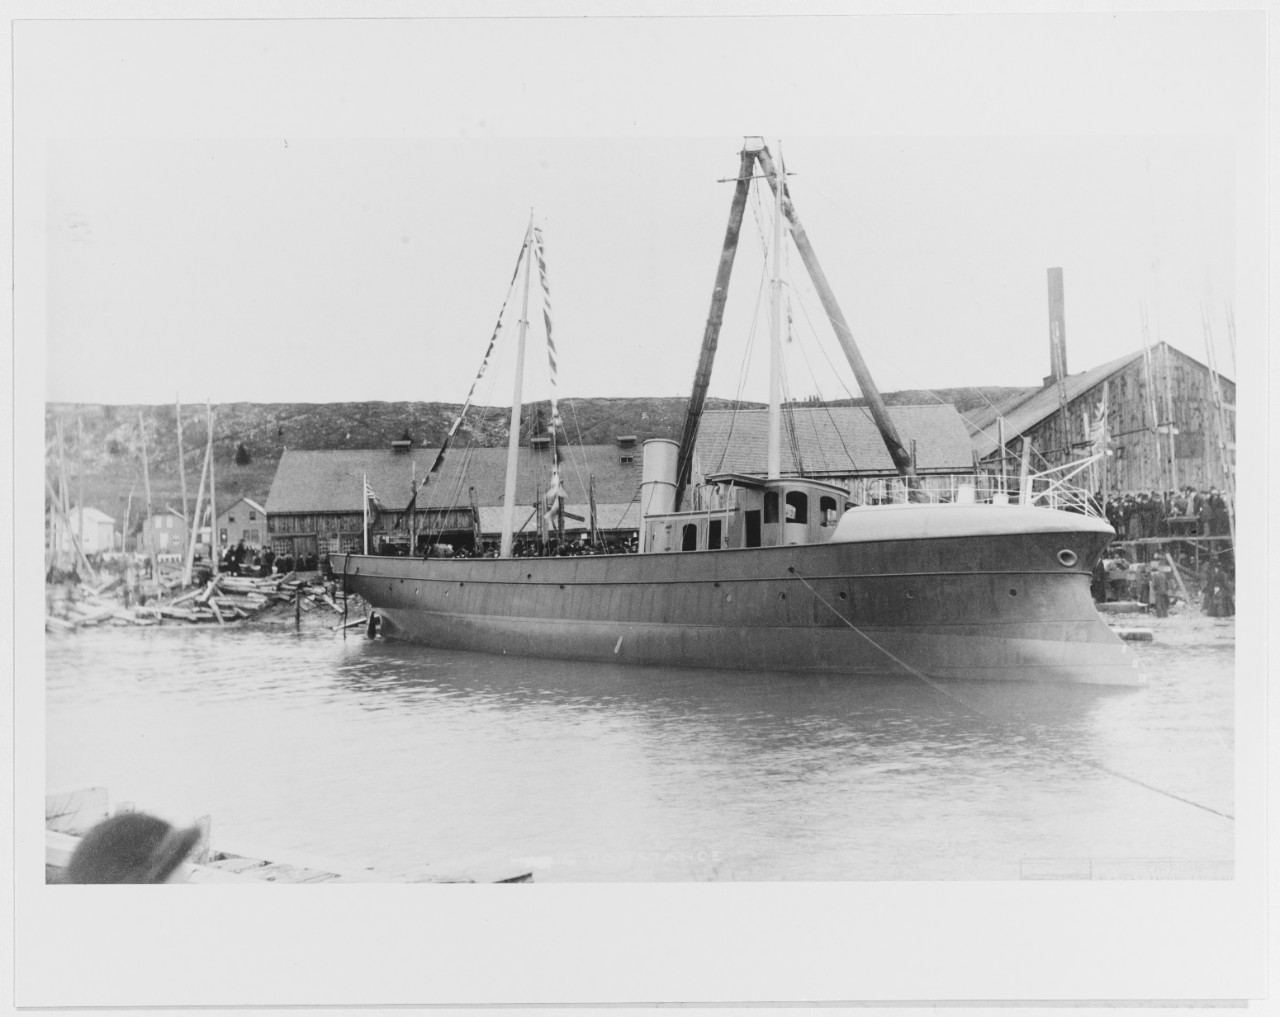 CONSTANCE (Canadian patrol vessel, 1891)